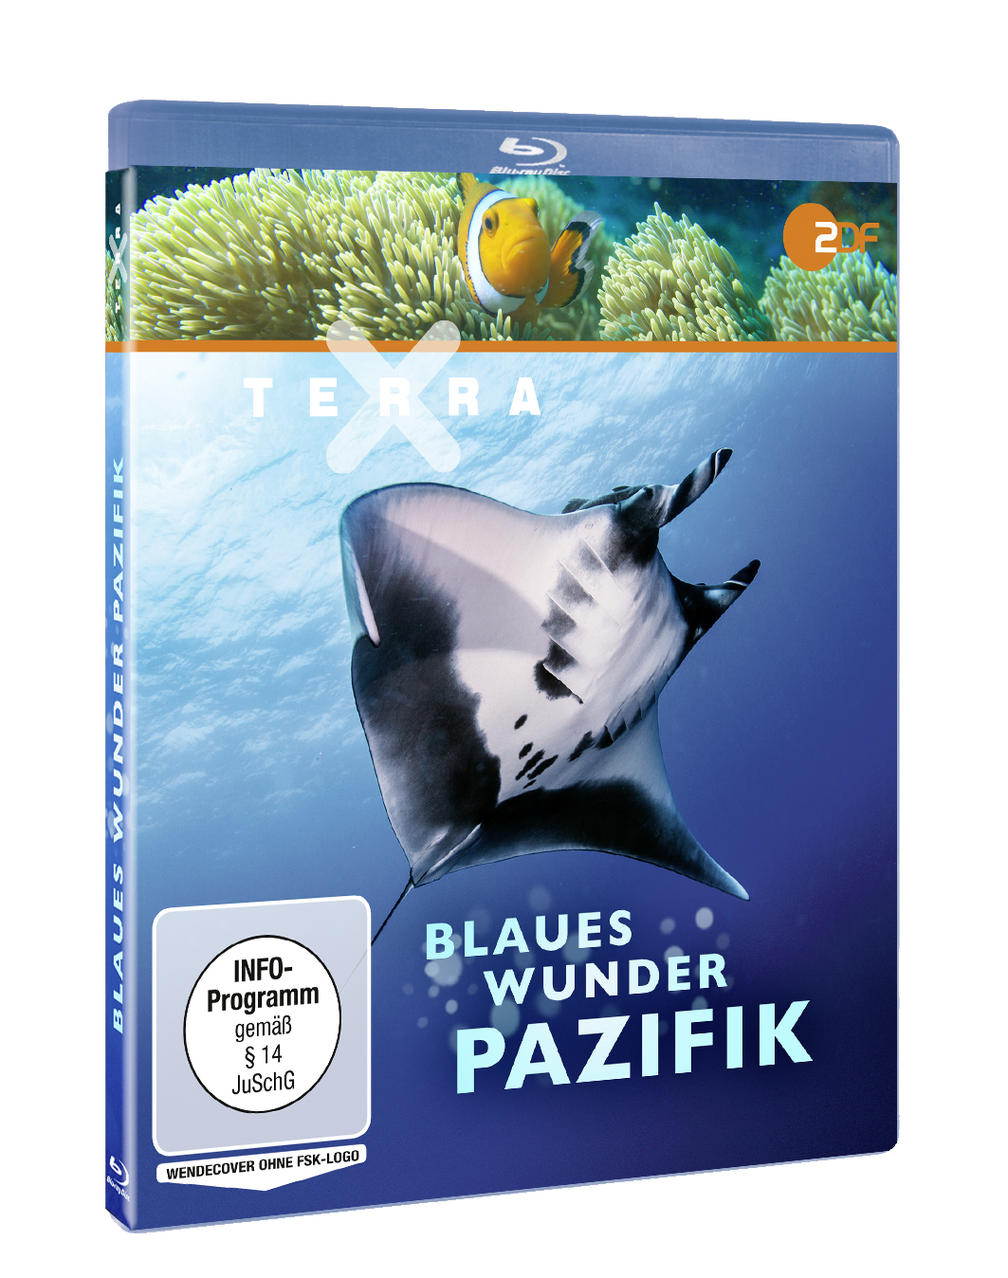 Blu-ray Terra Wunder X: Blaues Pazifik